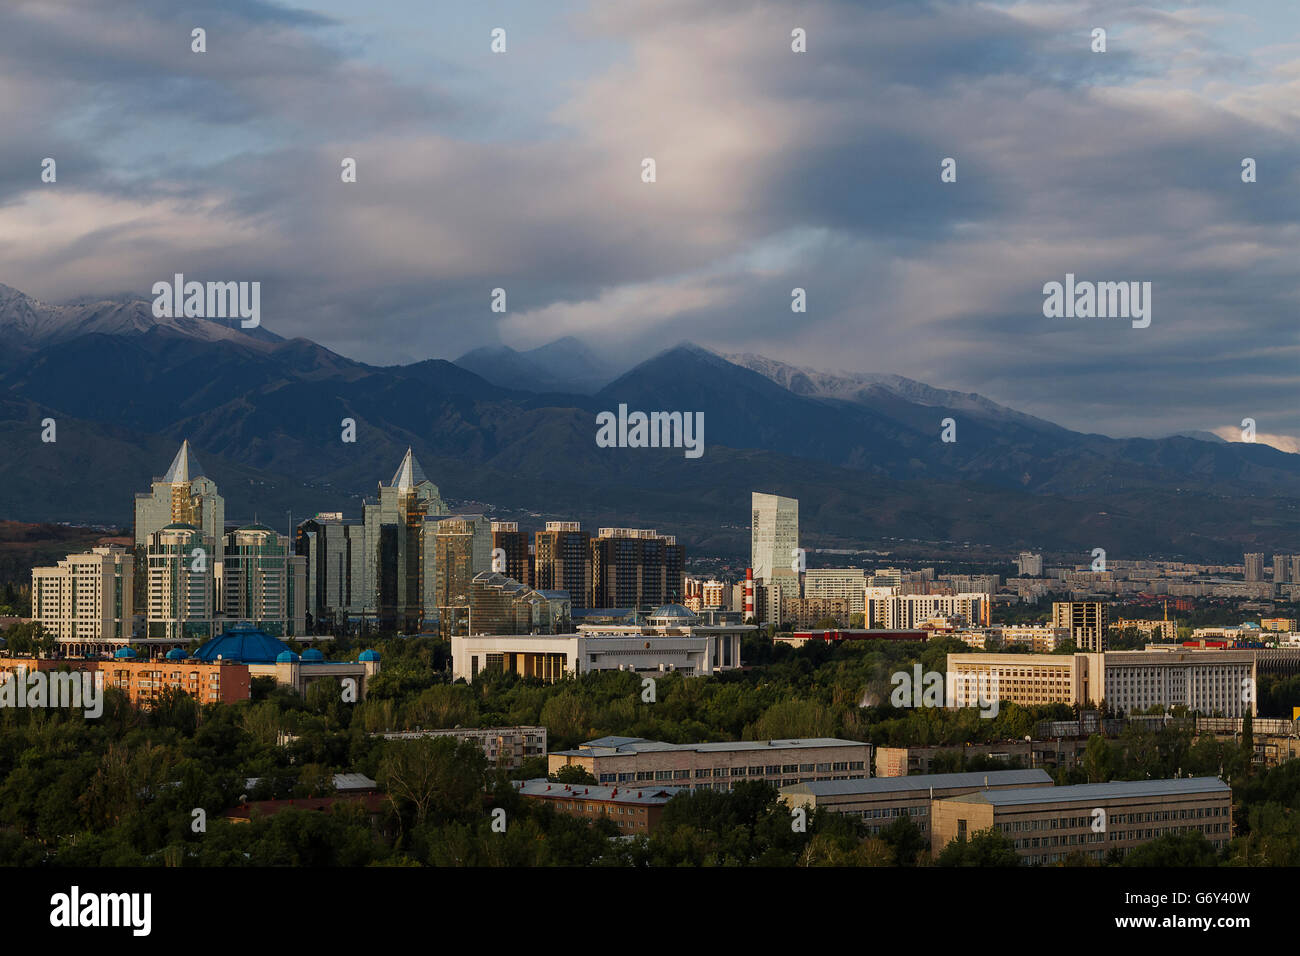 View over the city of Almaty, Kazakhstan. Stock Photo